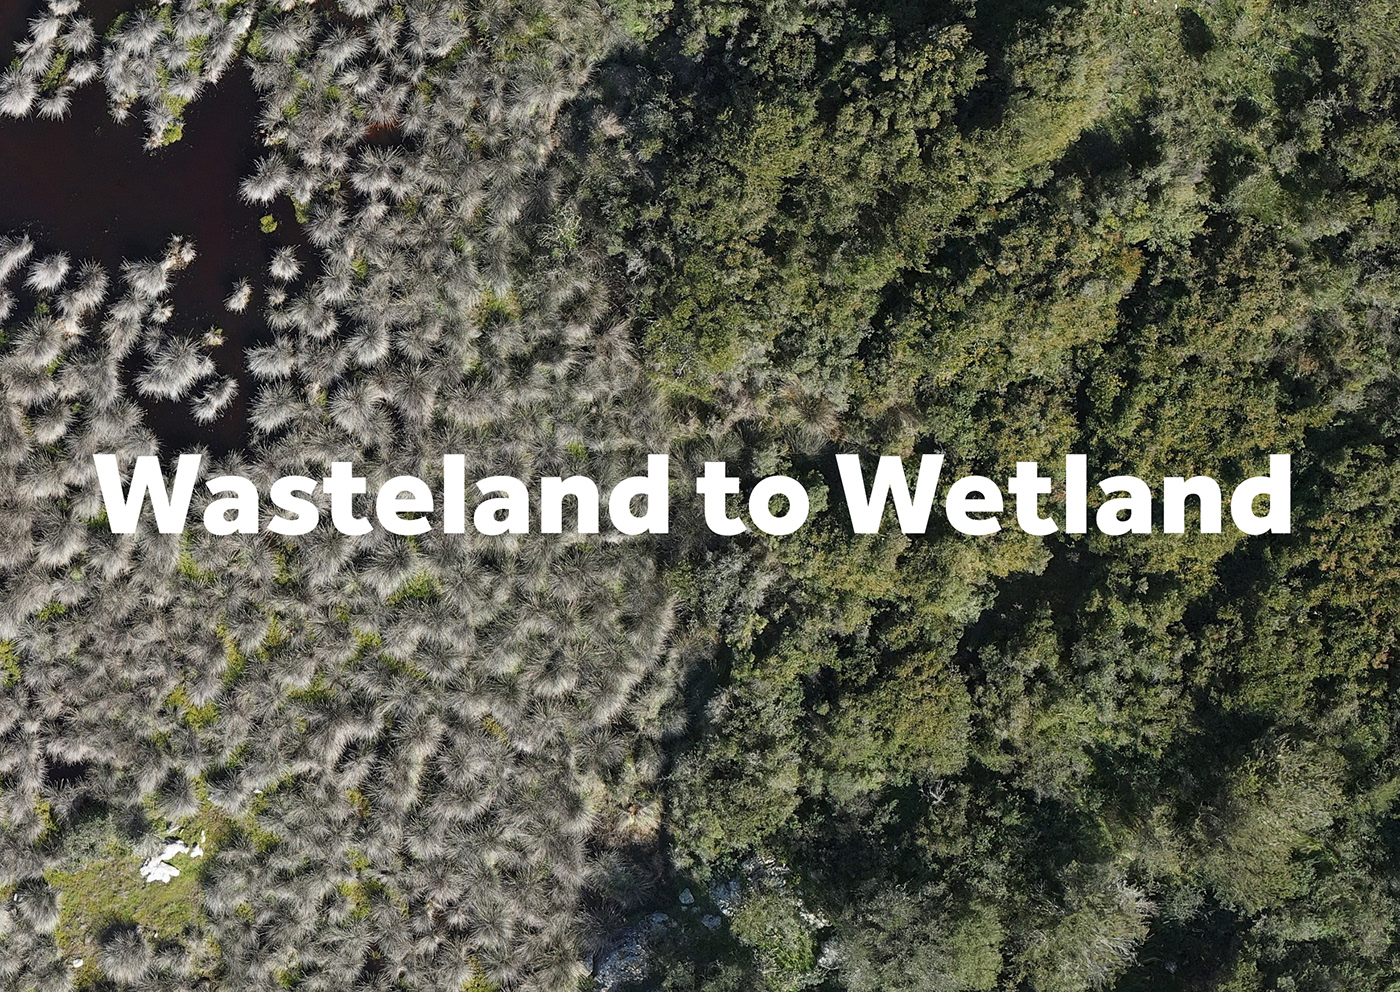 Geomatics survey Photogrammetry wetlands Landscaping Design Sustainability architecture 3ds max dronesurvey naturalism